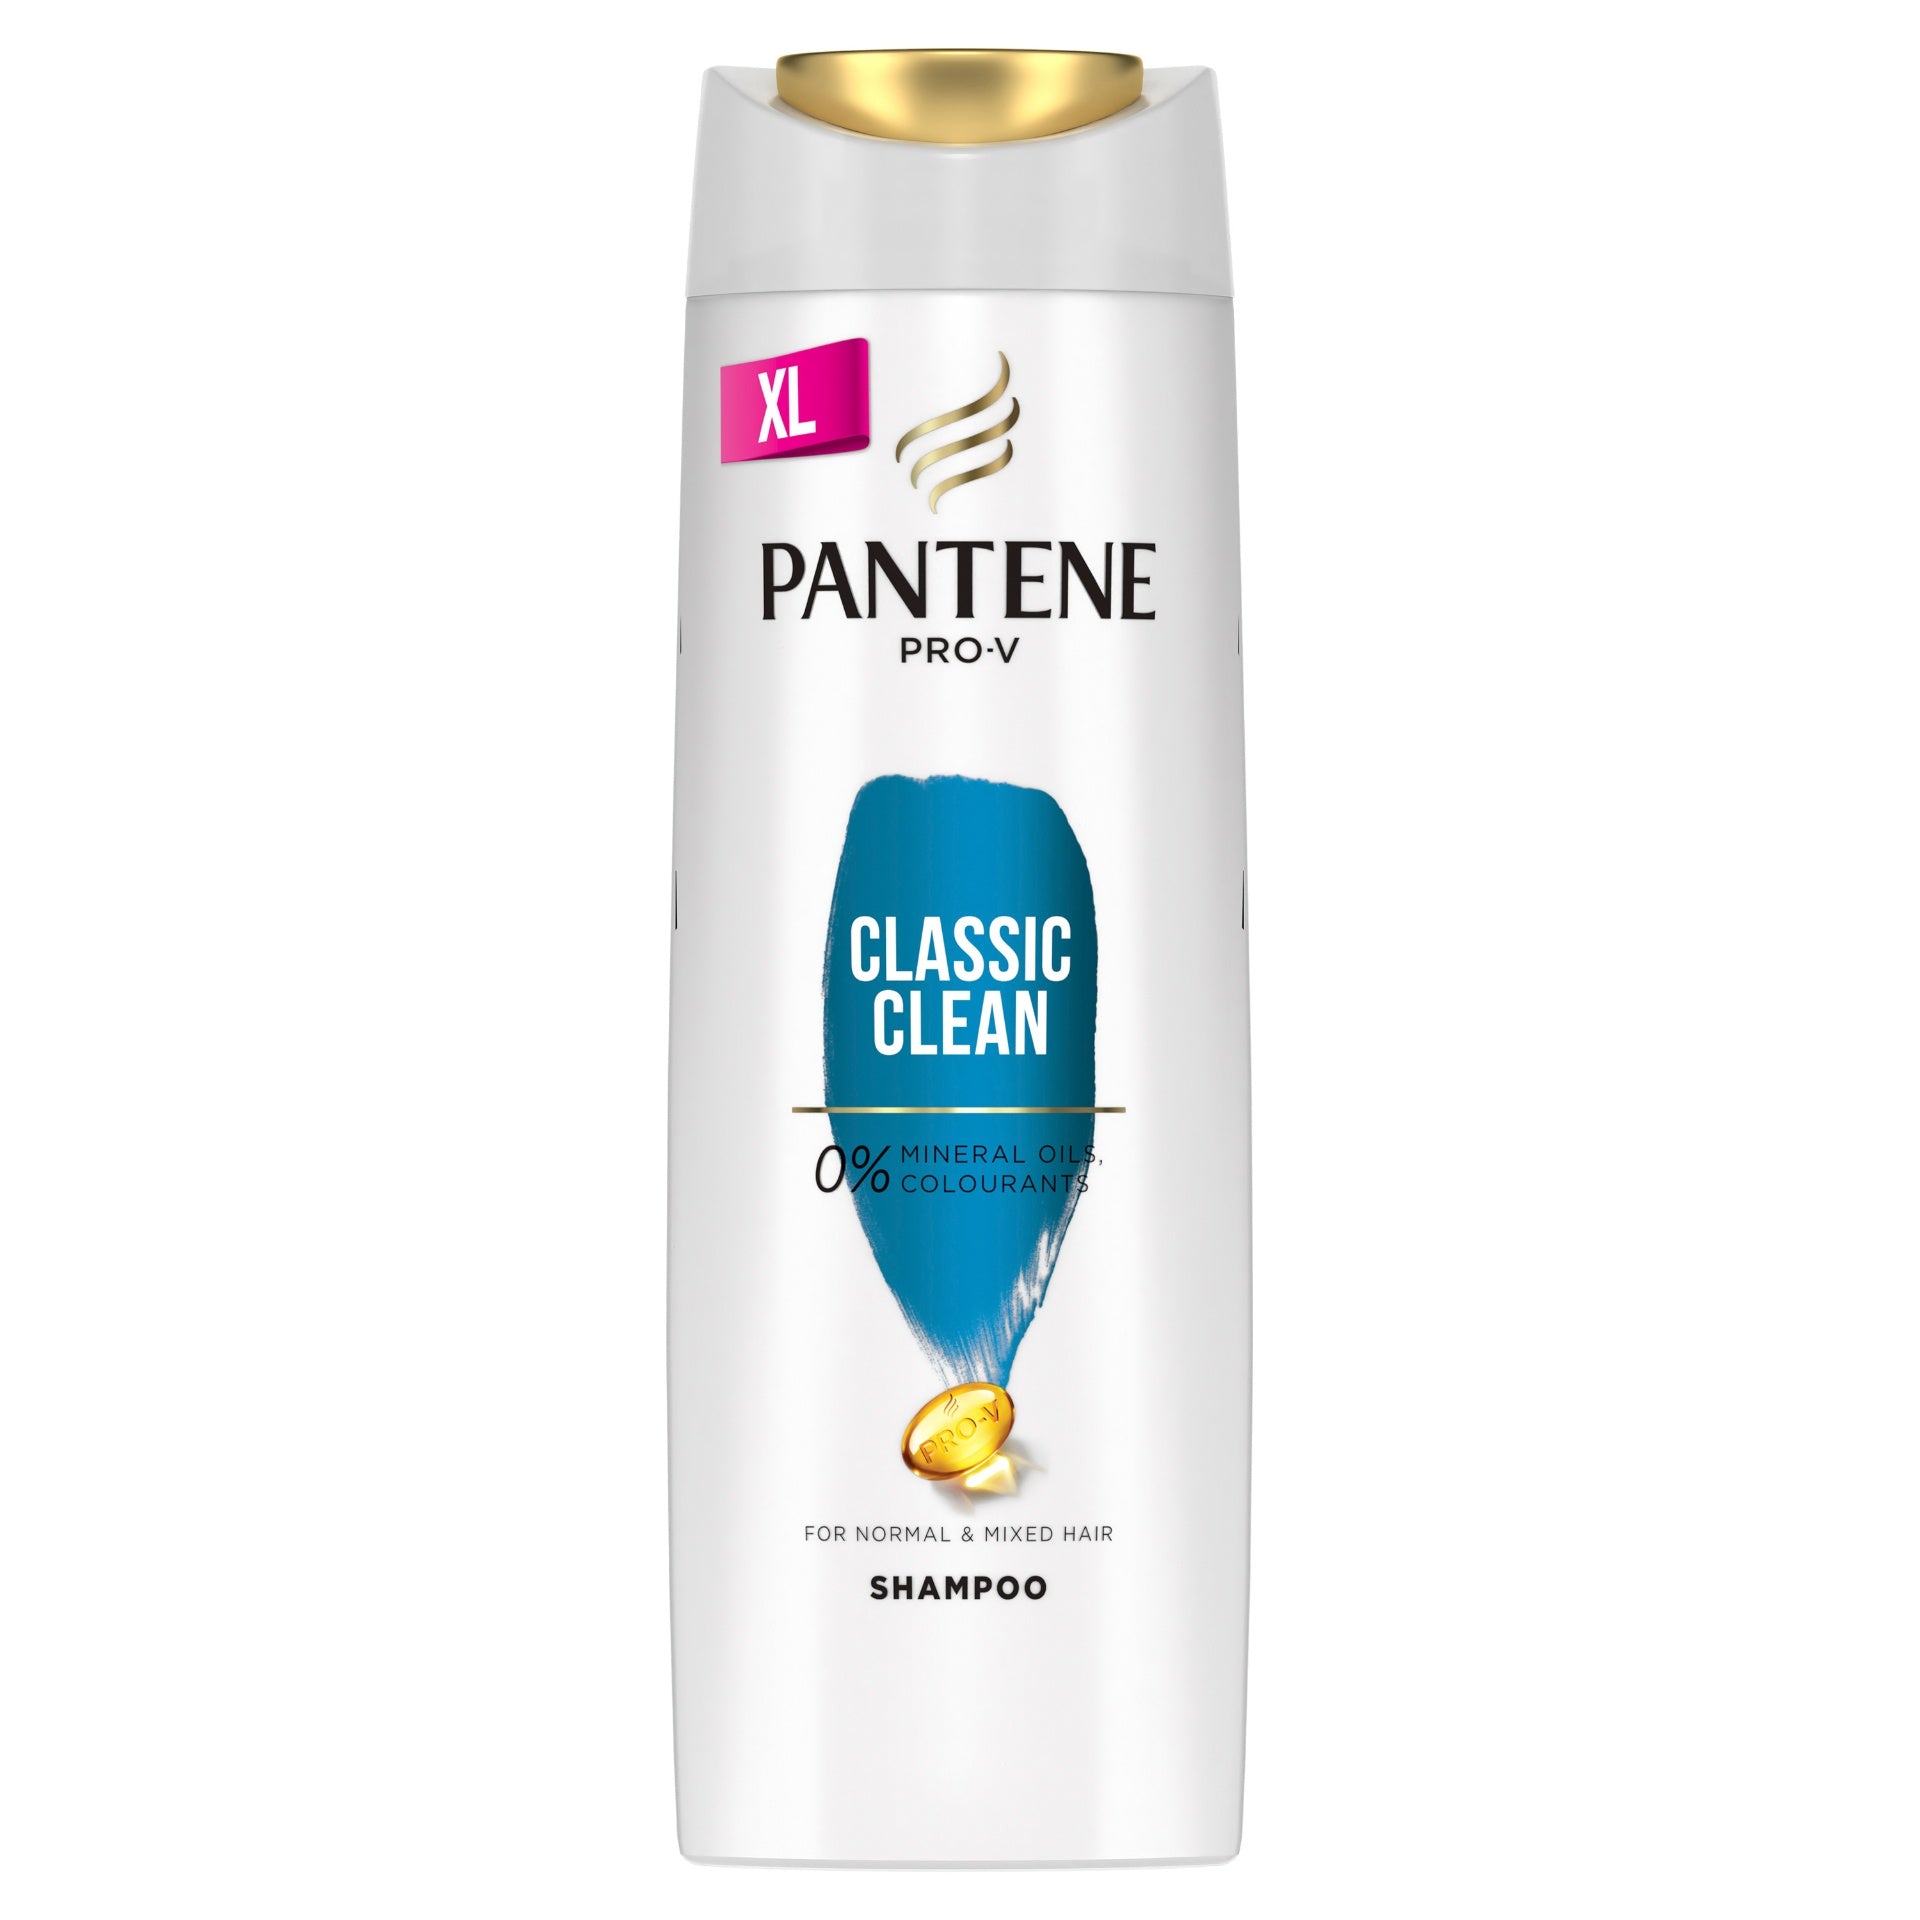 Pantene Shampoo - Classic Clean 500ml*